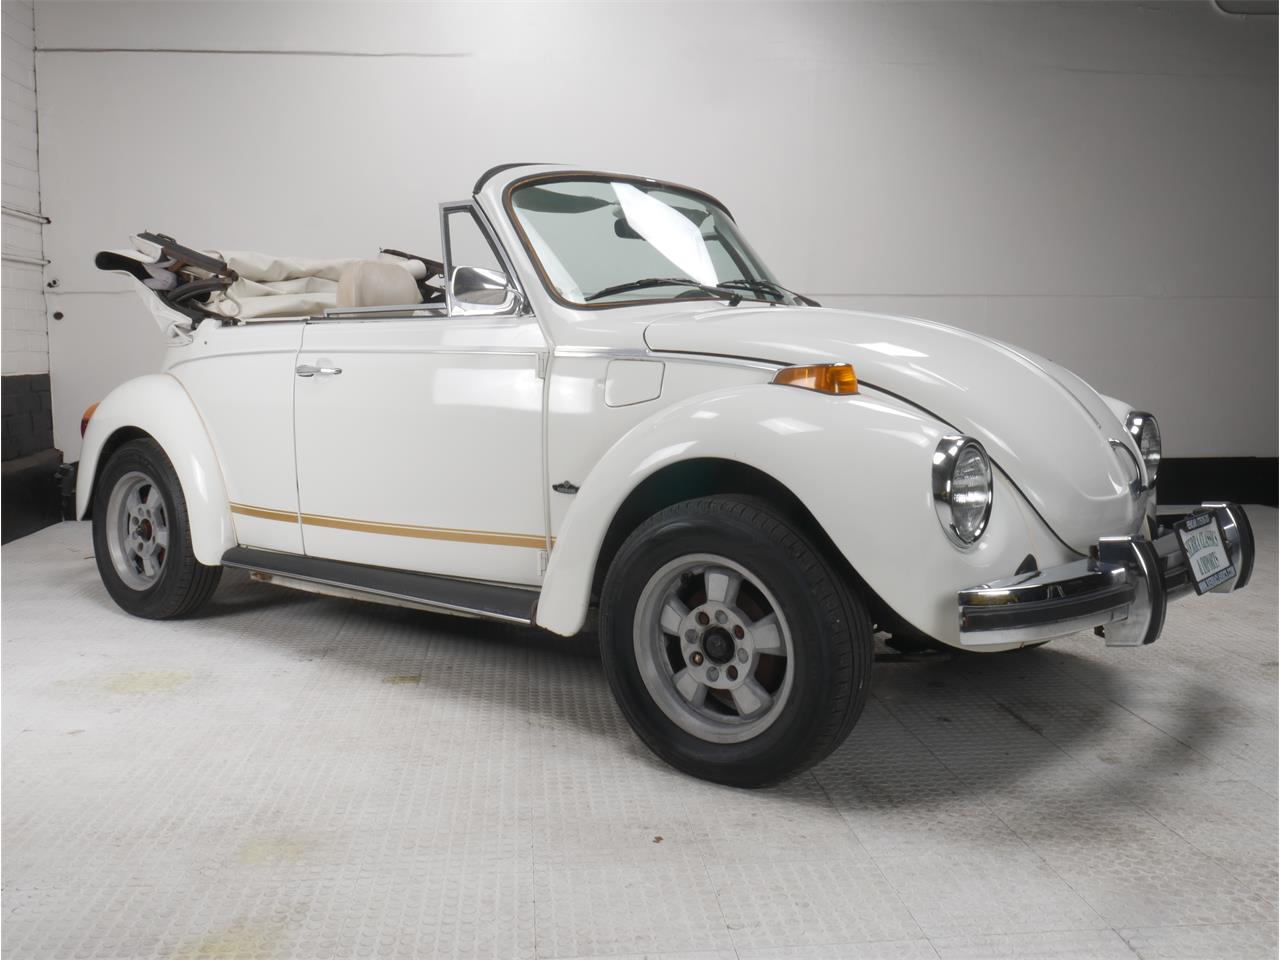 For Sale: 1977 Volkswagen Super Beetle in Reno, Nevada for sale in Reno, NV